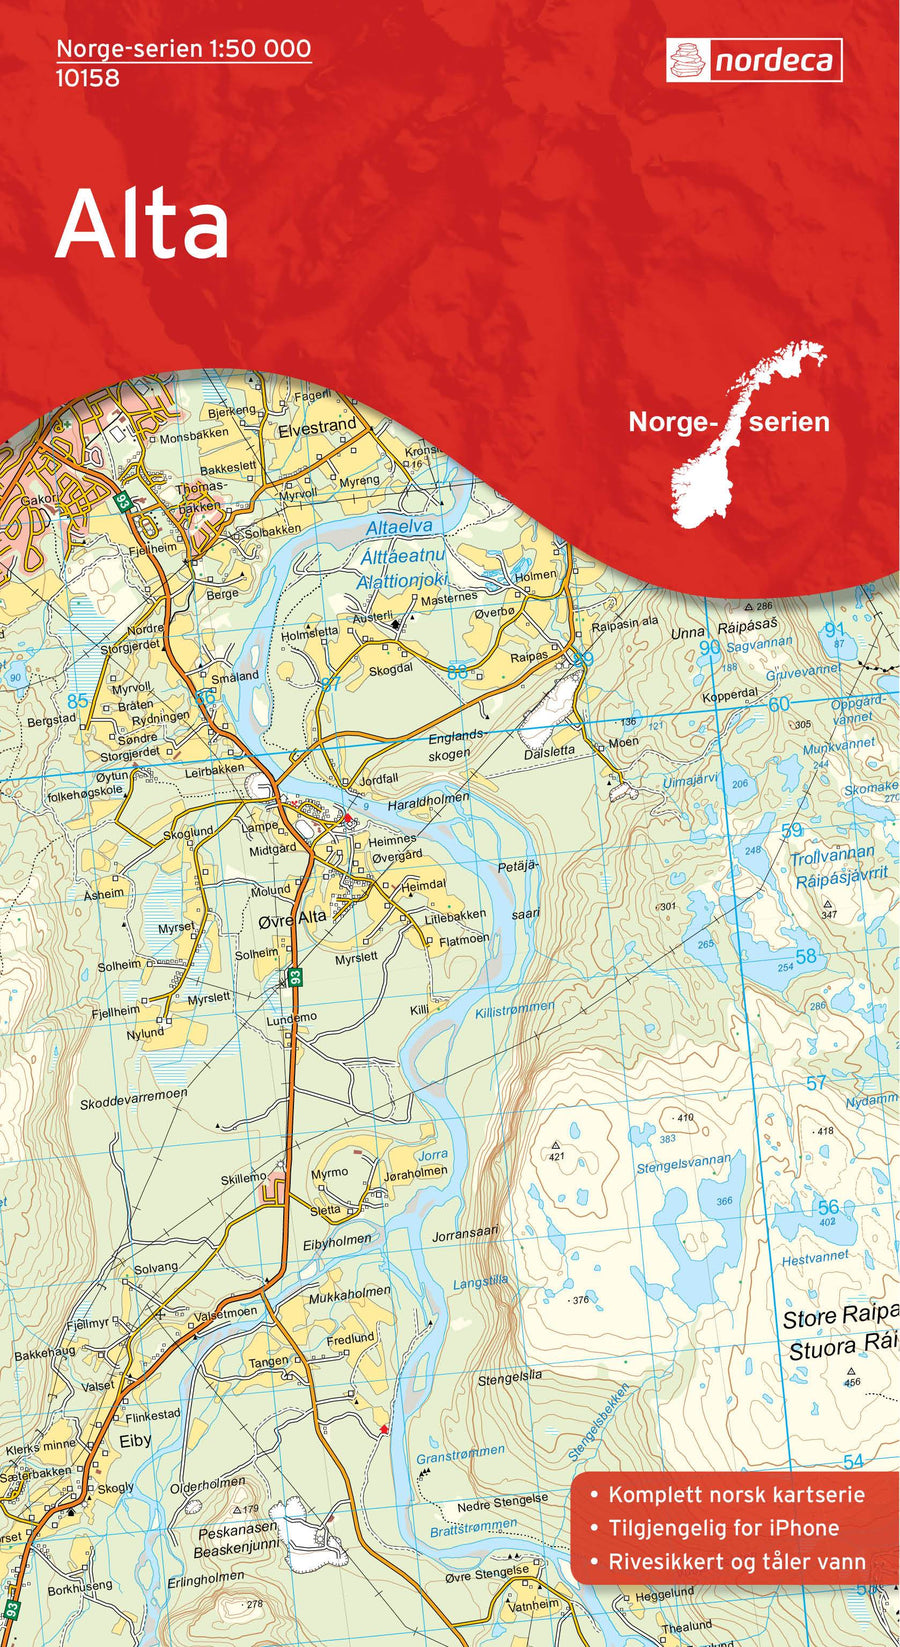 Carte de randonnée n° 10158 - Alta (Norvège) | Nordeca - Norge-serien carte pliée Nordeca 